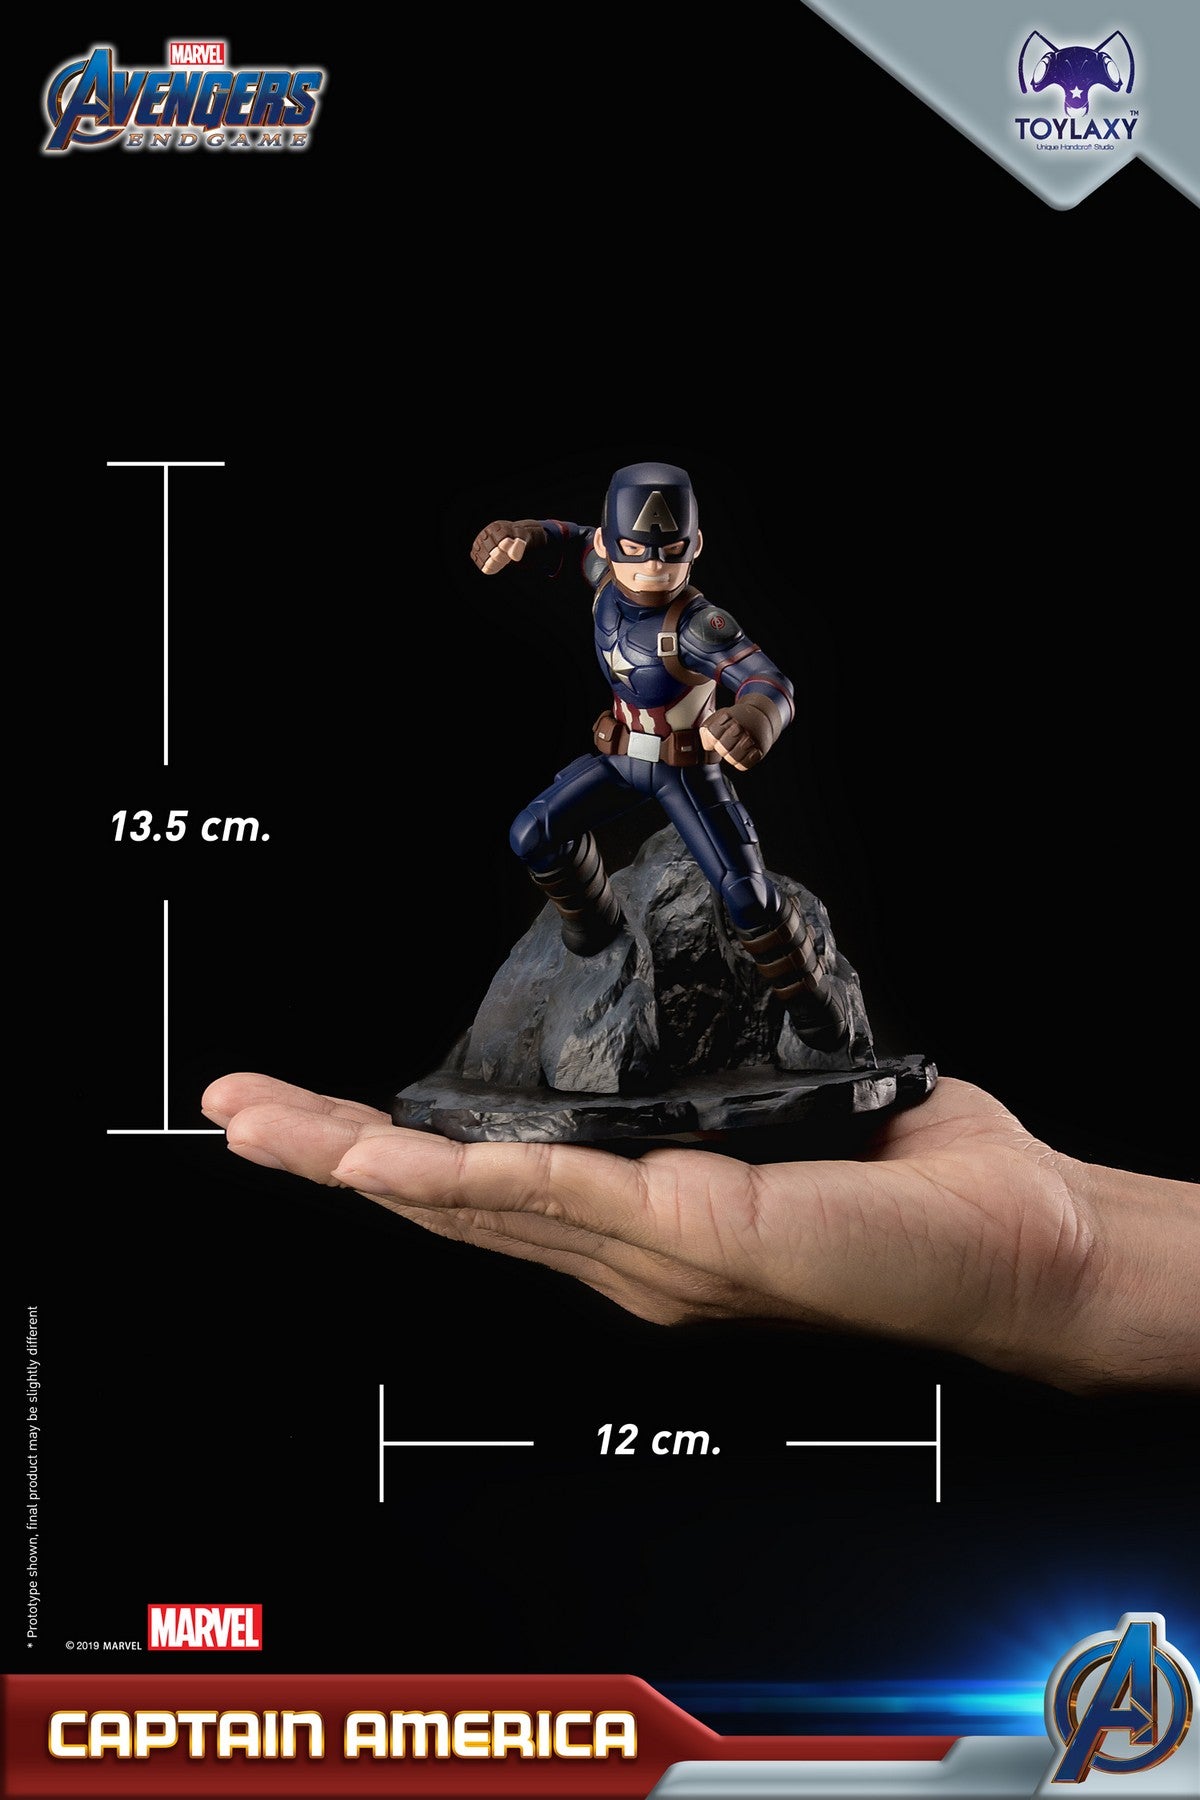 漫威復仇者聯盟：美國隊長正版模型手辦人偶玩具 Marvel's Avengers: Endgame Premium PVC Captain America official figure toy wave 1 size